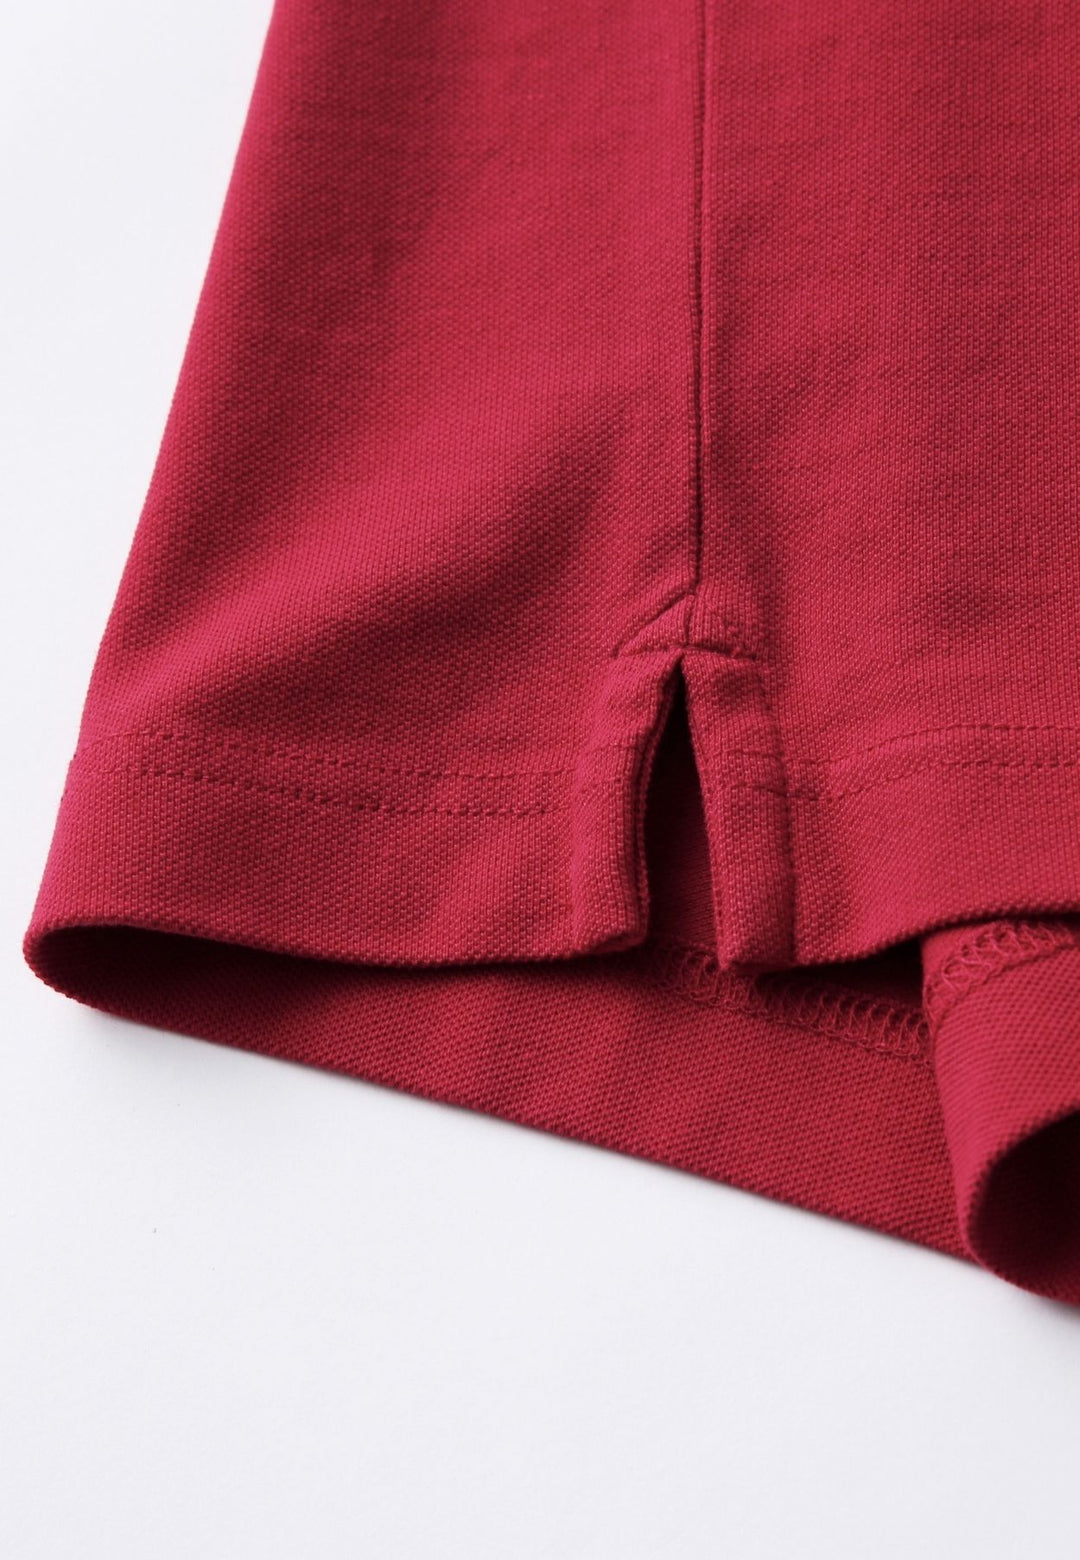 Rivet & Denim Mountain Polo Shirt | Red